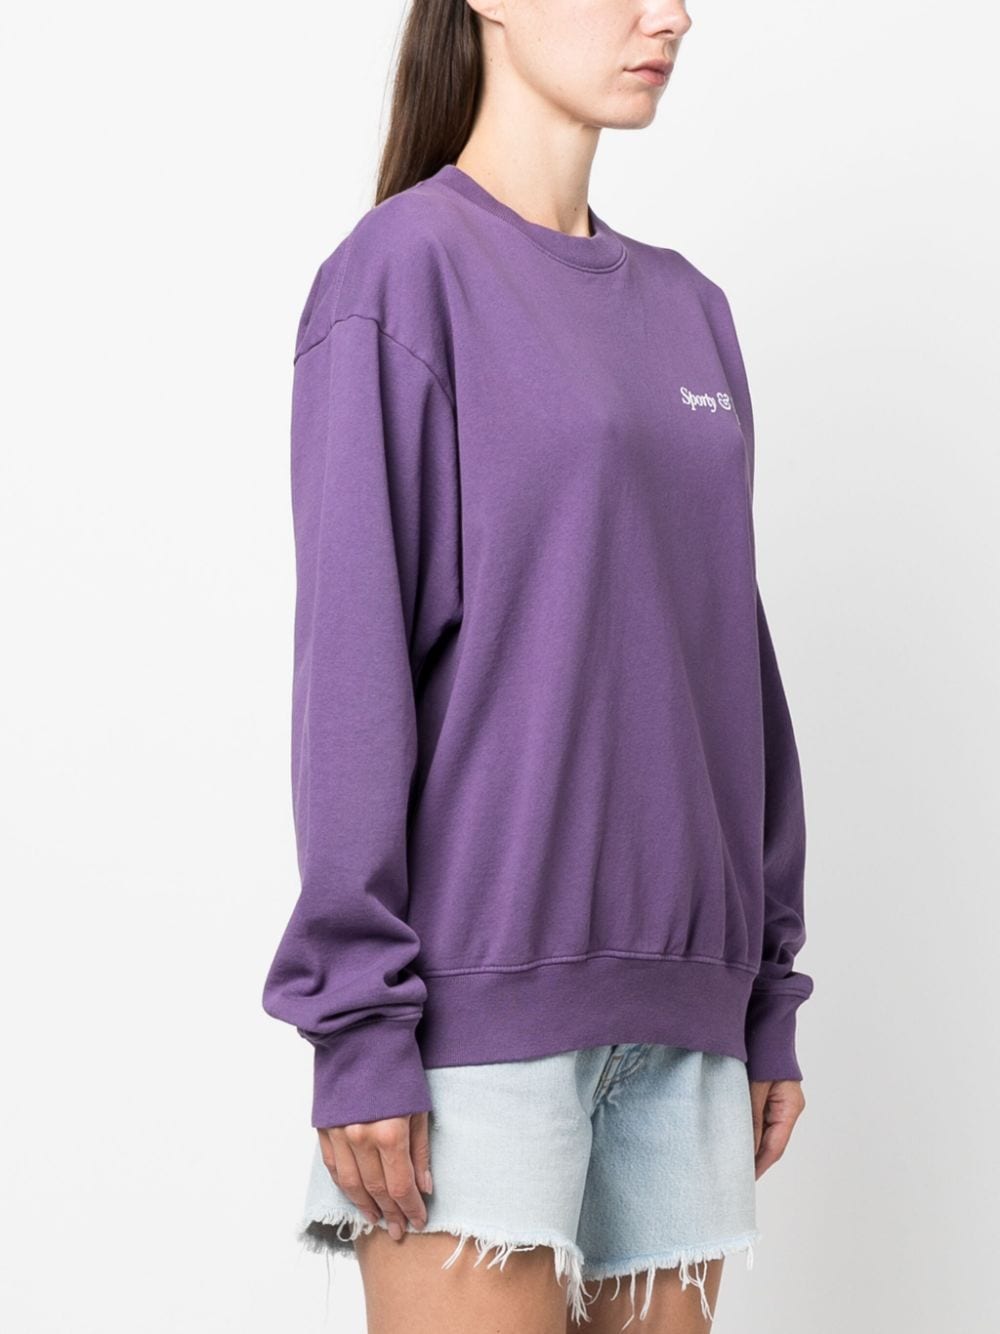 Sweatshirt with HWCNY print